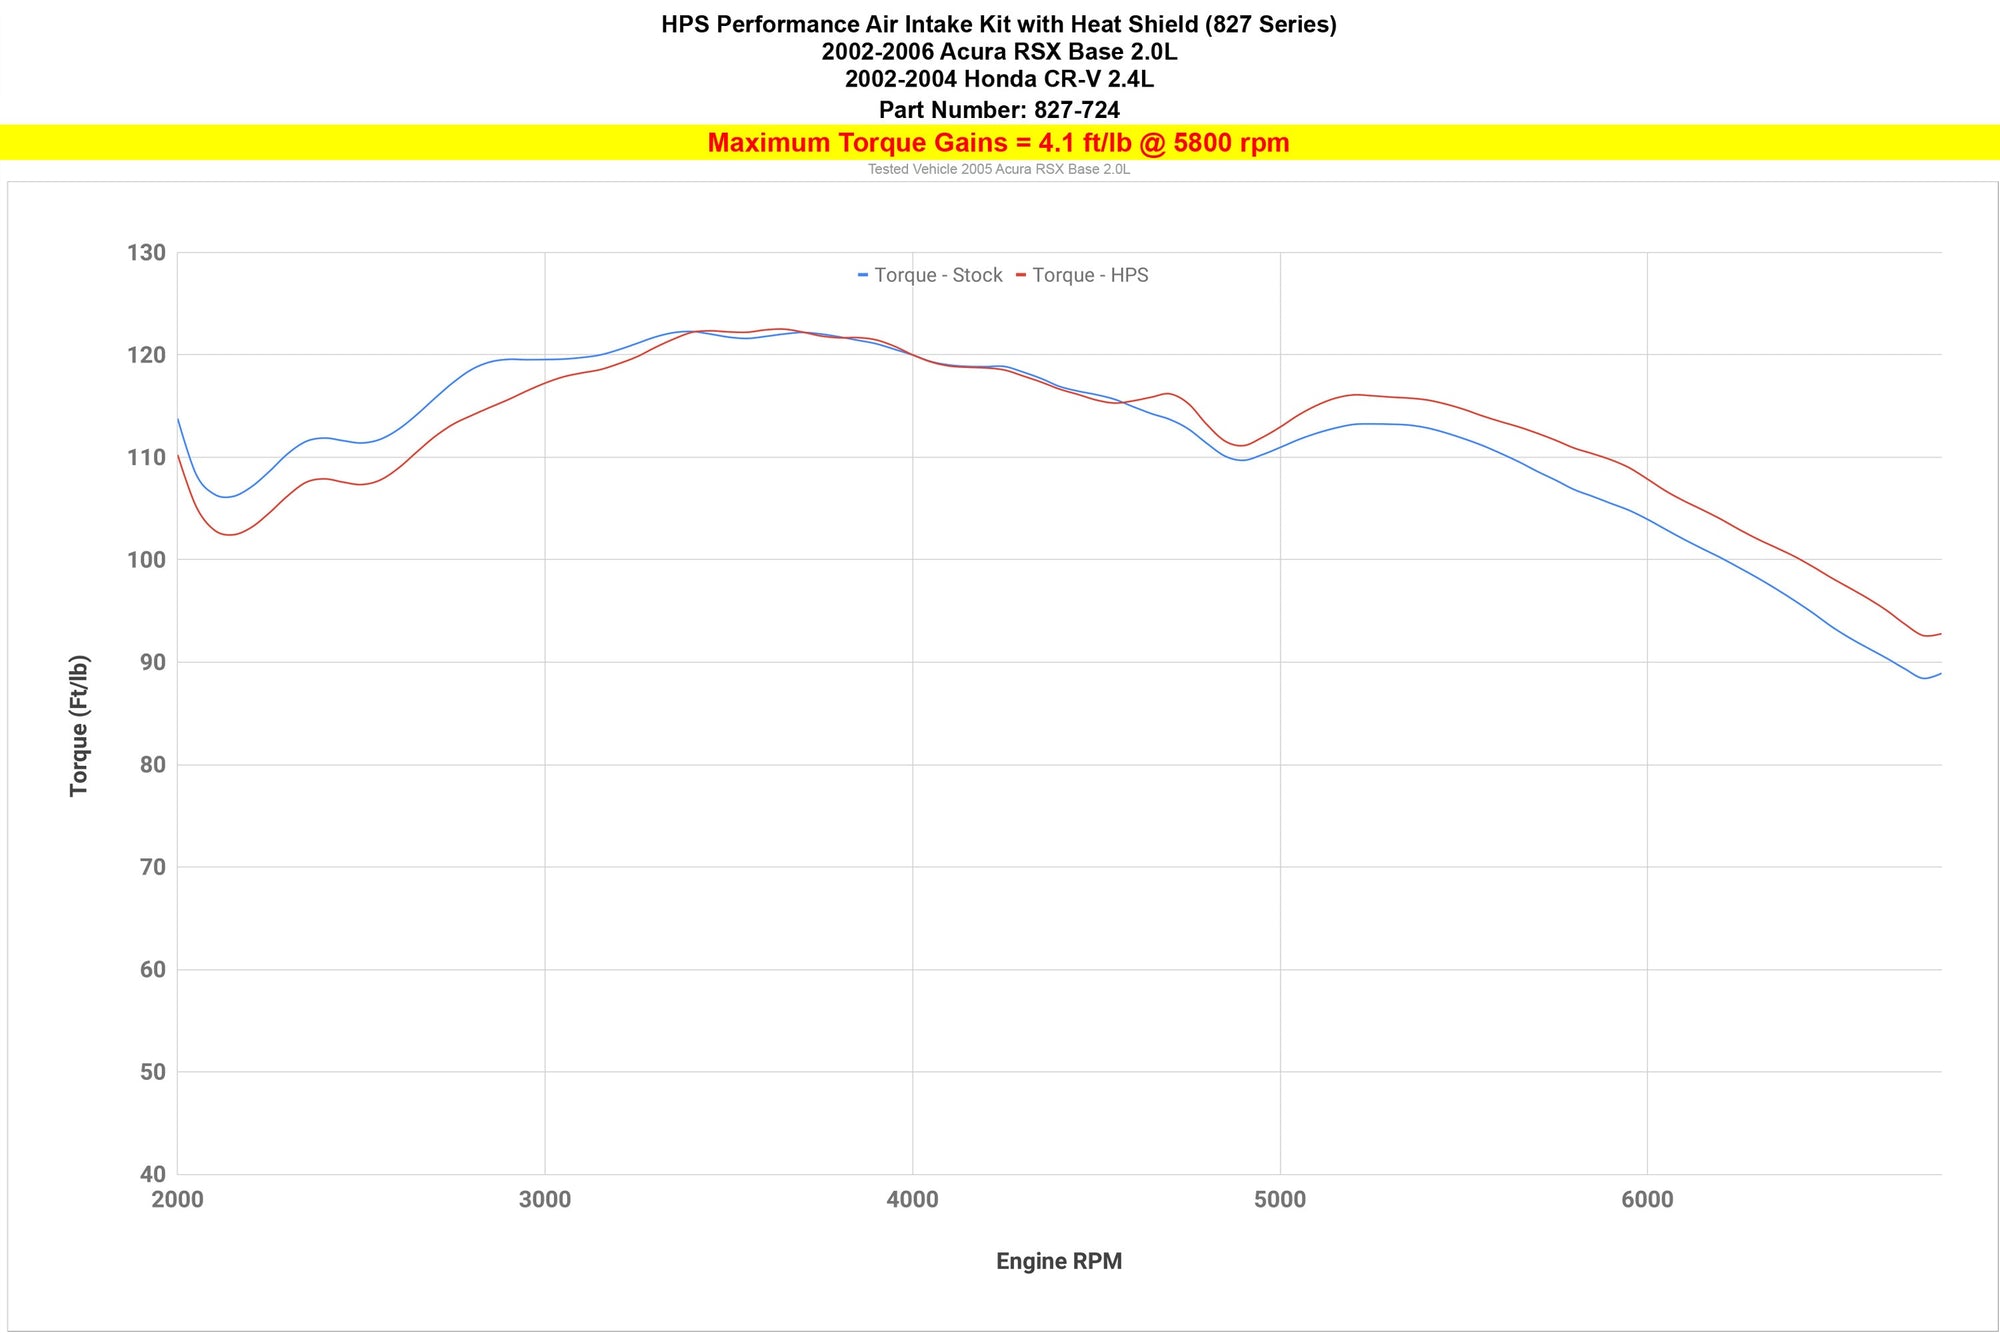 HPS Shortram Air Intake Kit increase torque 4.1 ft/lb gains 2002-2004 Honda CR-V 2.4L 827-724